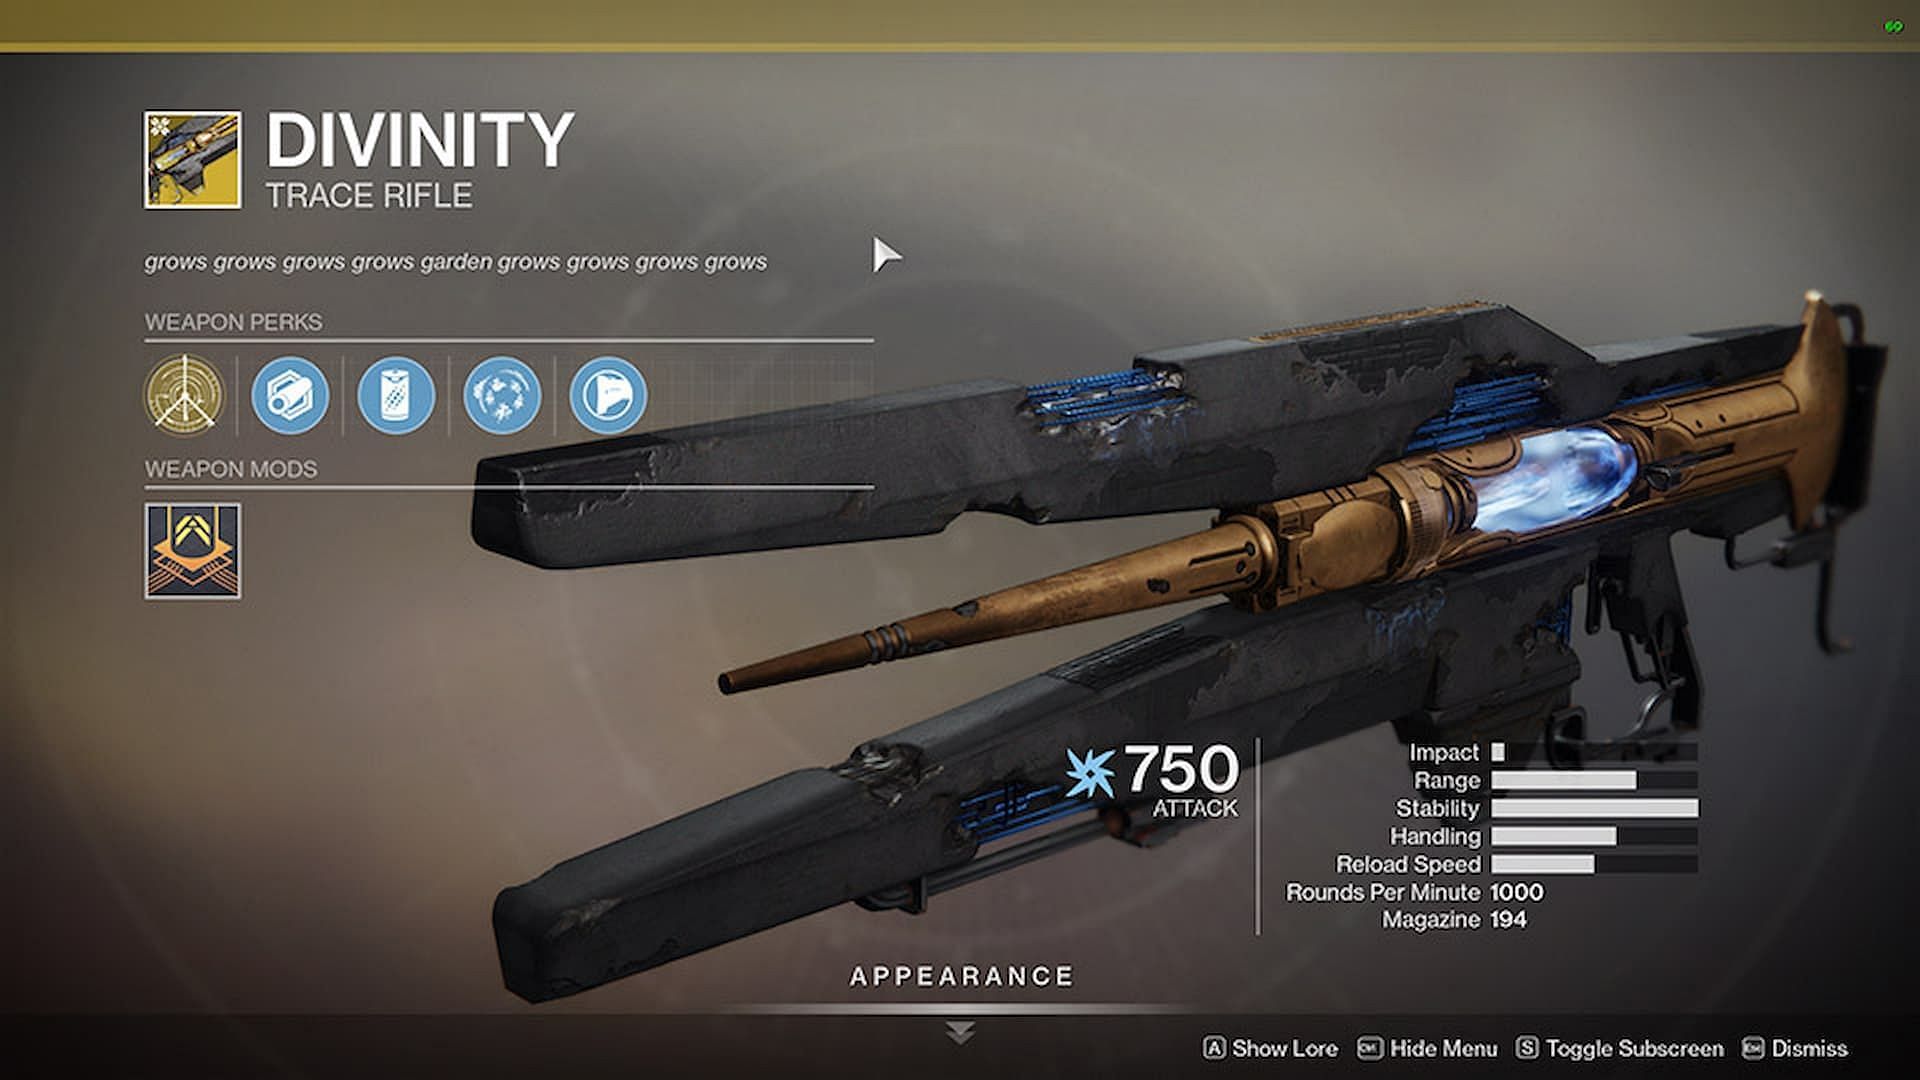 Divinity rifle in Destiny 2 (Image via Bungie)